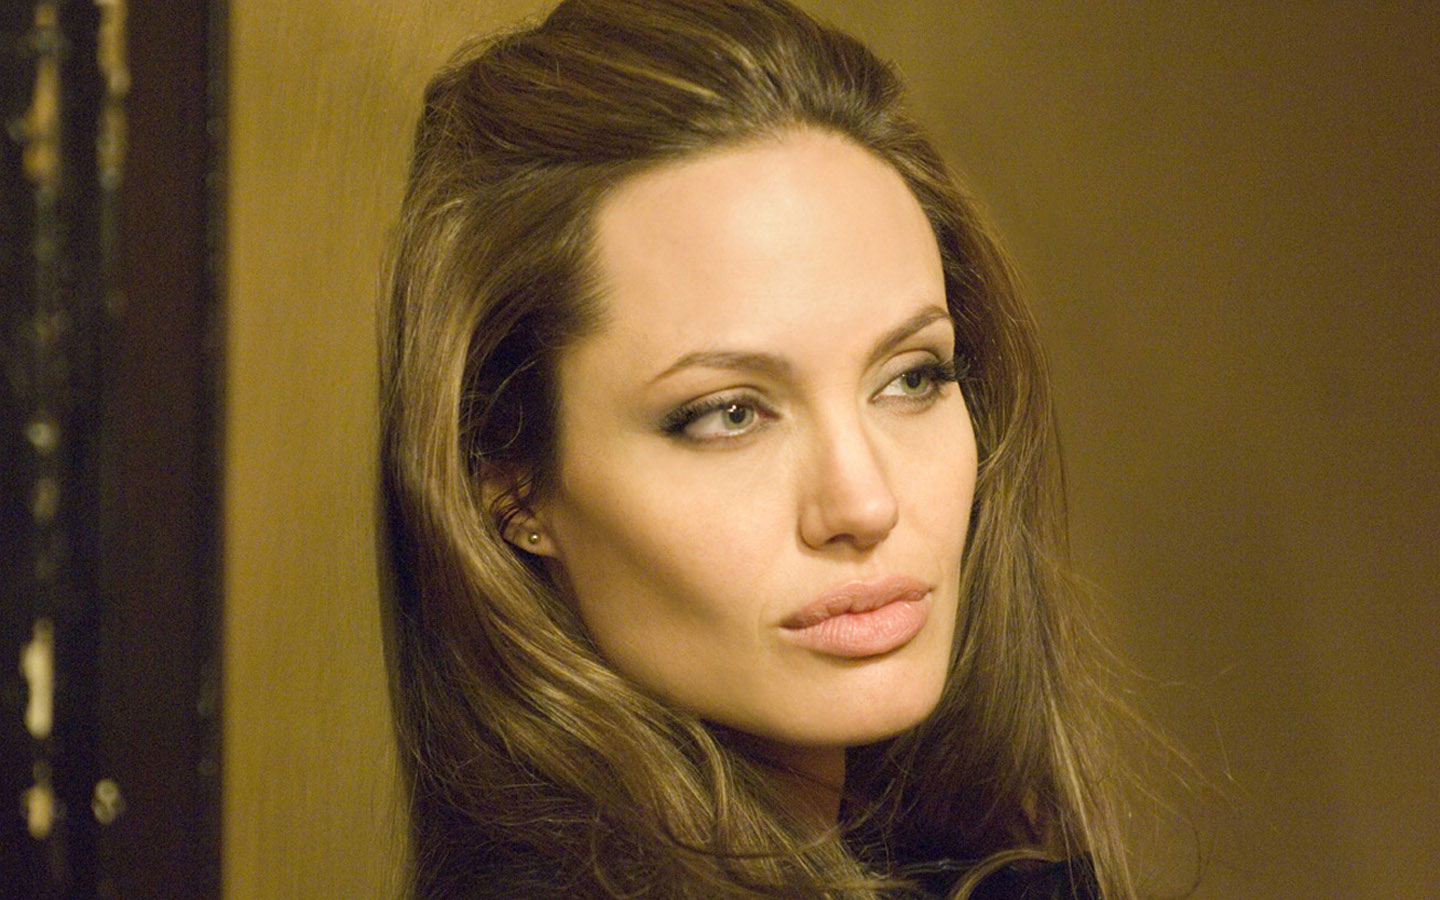 Angelina Jolie Wallpapers Hd Angelina Jolie Desktop HD Wallpapers Download Free Images Wallpaper [wallpaper981.blogspot.com]